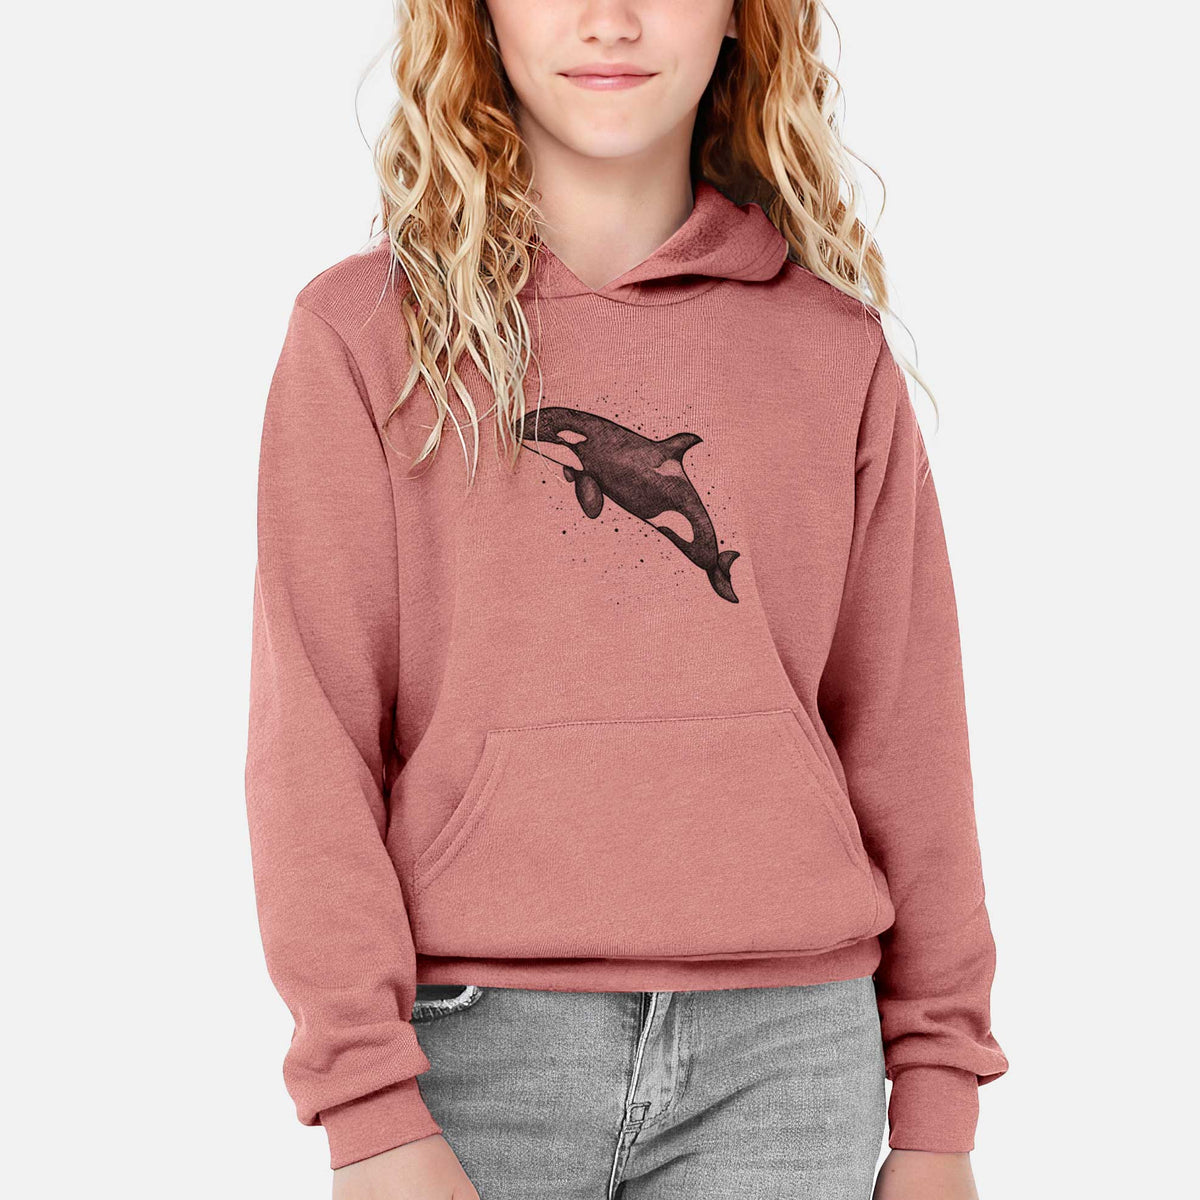 Orca Whale - Youth Hoodie Sweatshirt